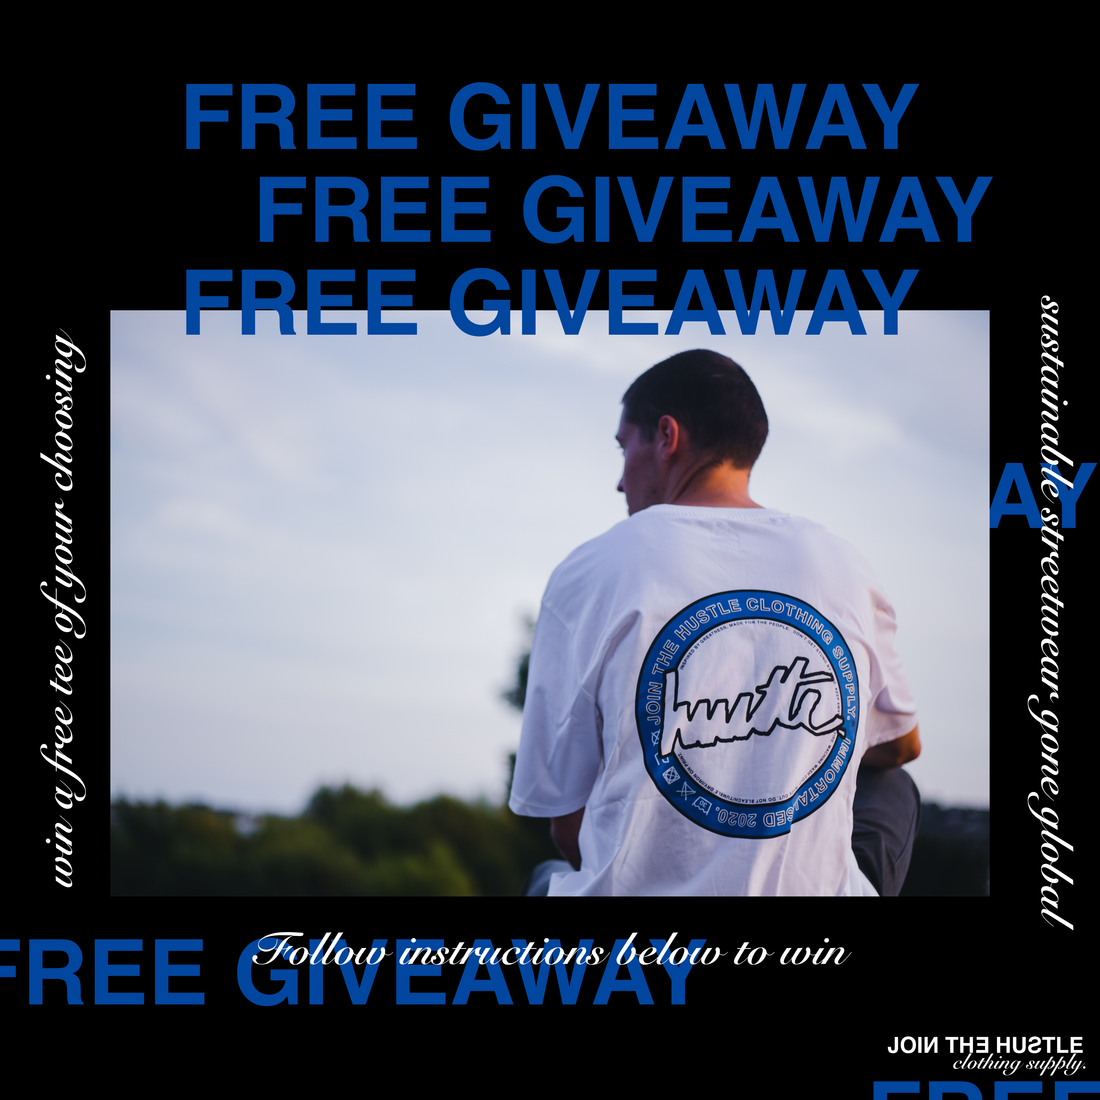 Win a free t-shirt!